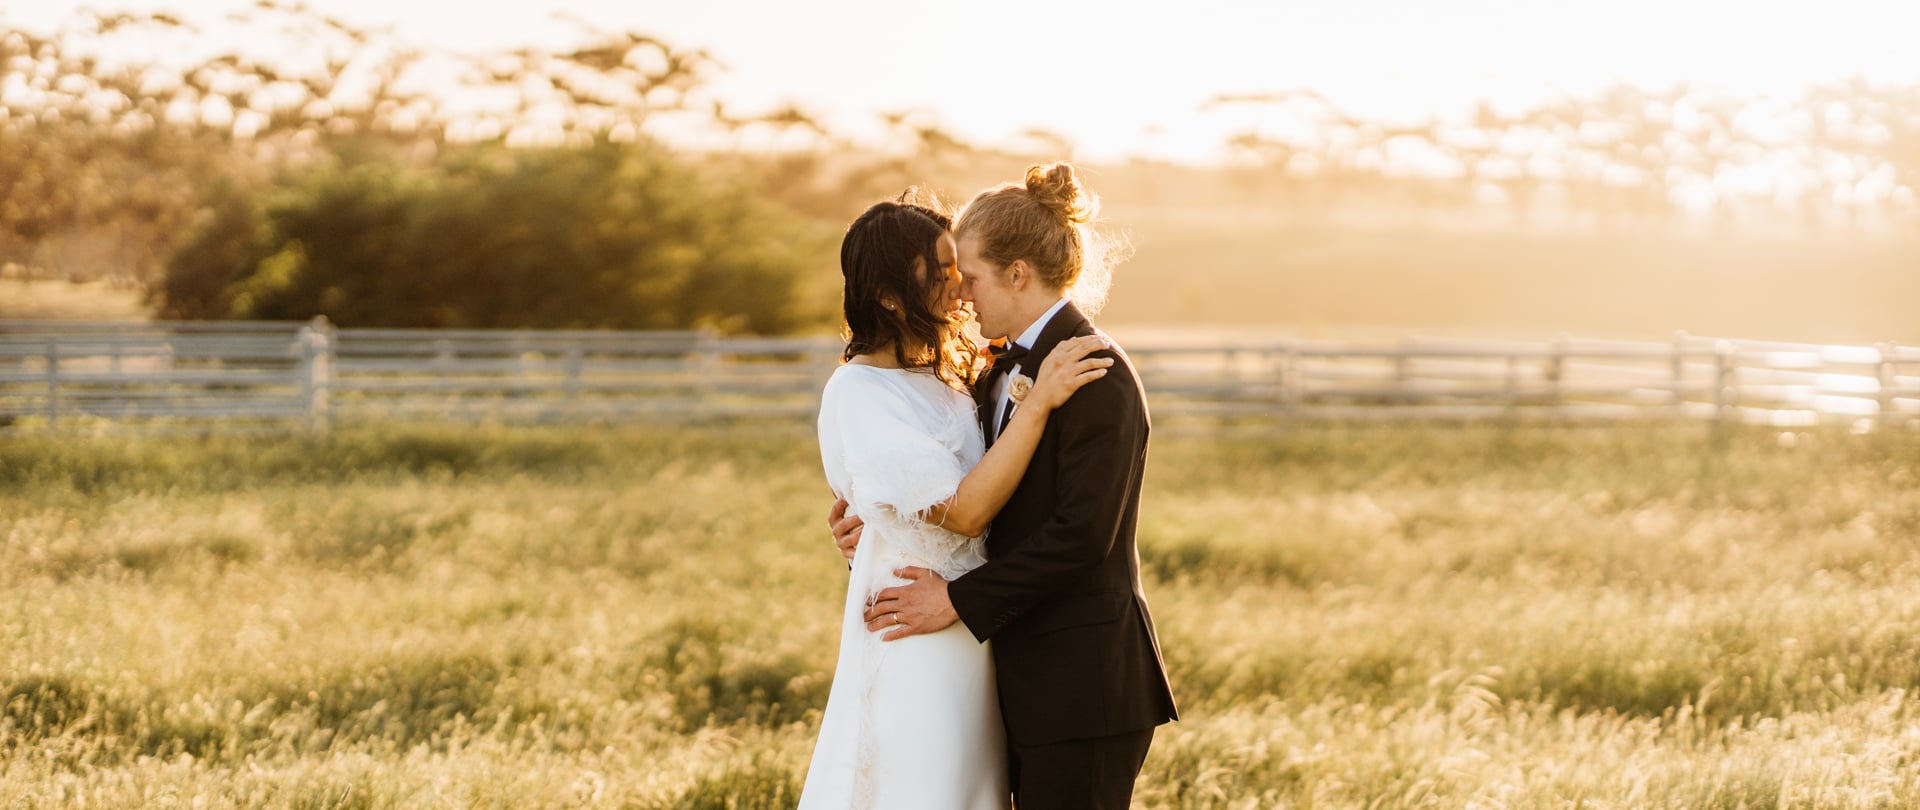 Connor & Kylie Wedding Video Filmed at Victoria, Australia